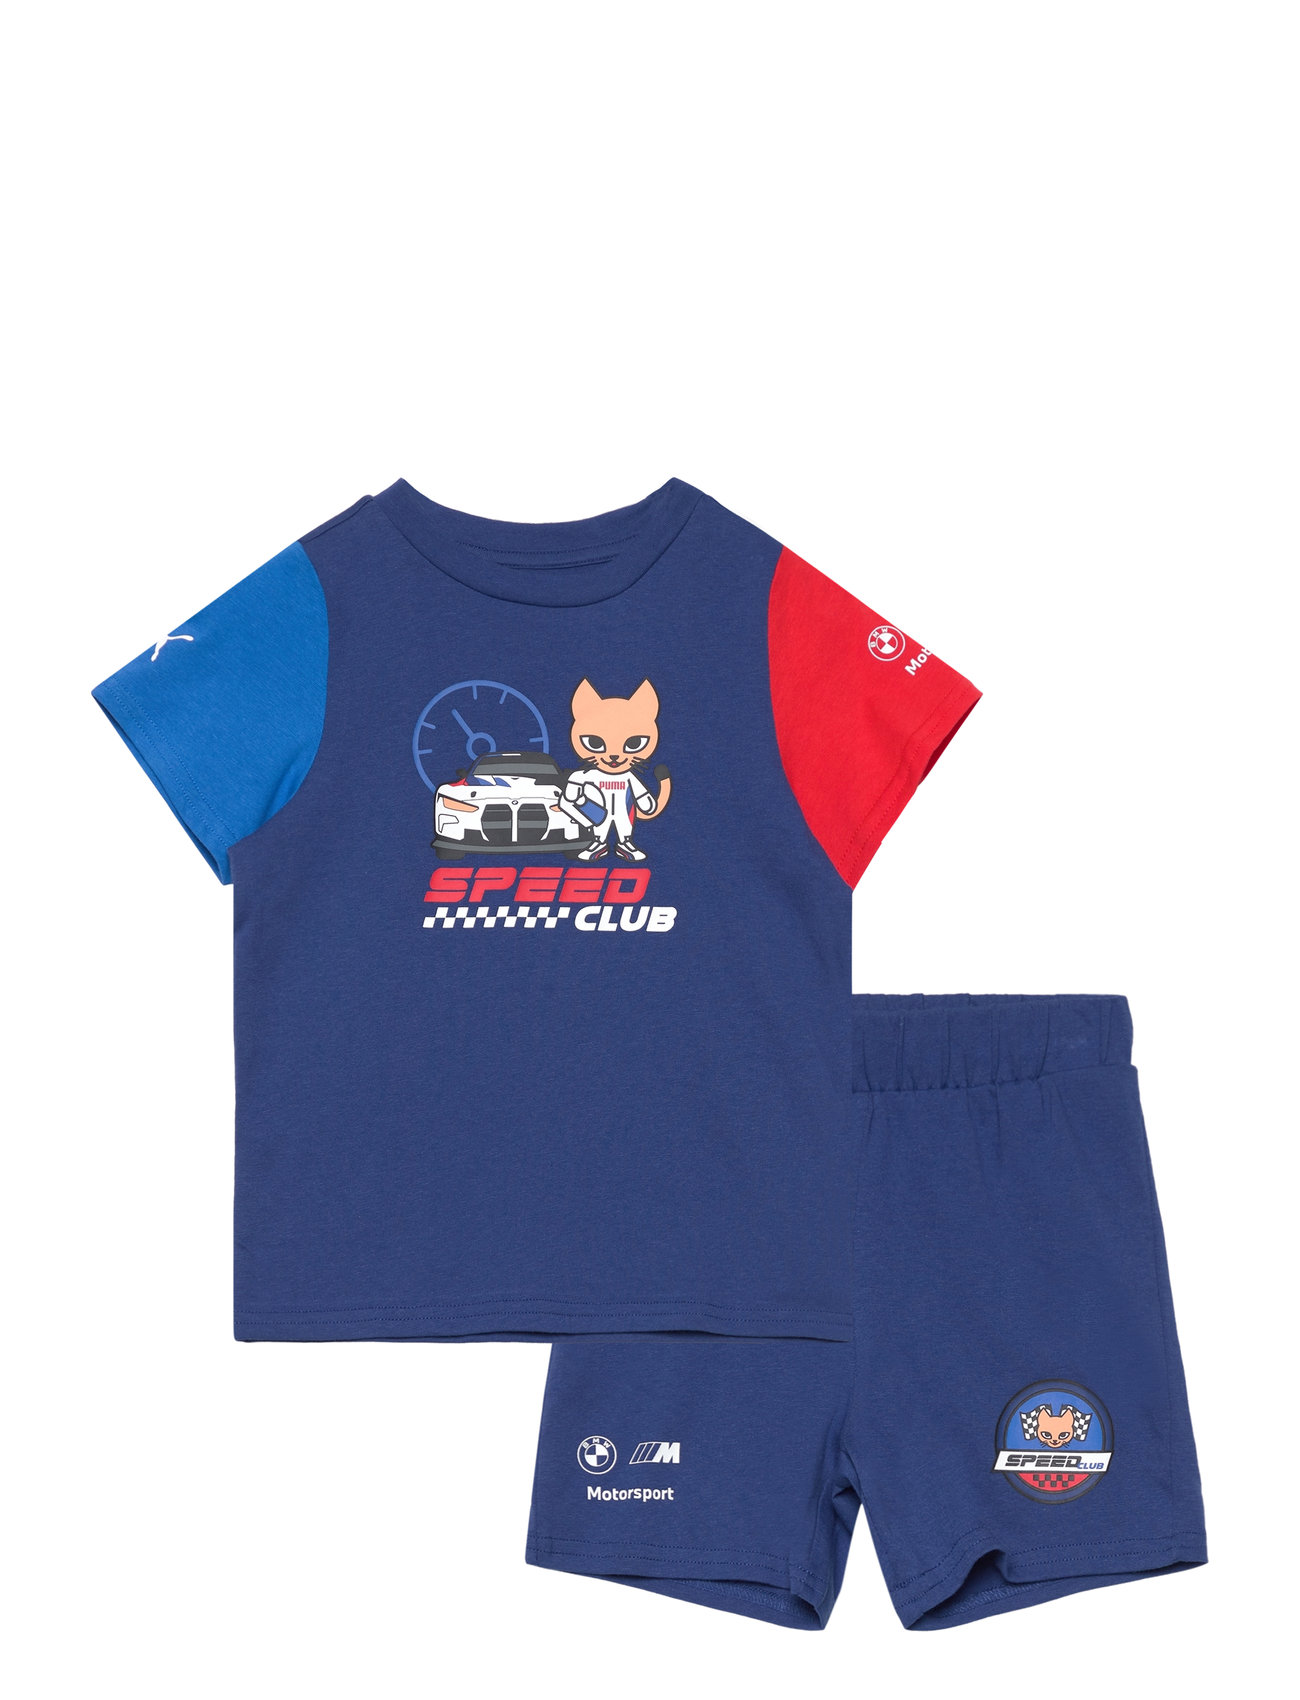 Bmw Mmw Toddler Shortsleeve Set Sport Sets With Short-sleeved T-shirt Blue PUMA Motorsport